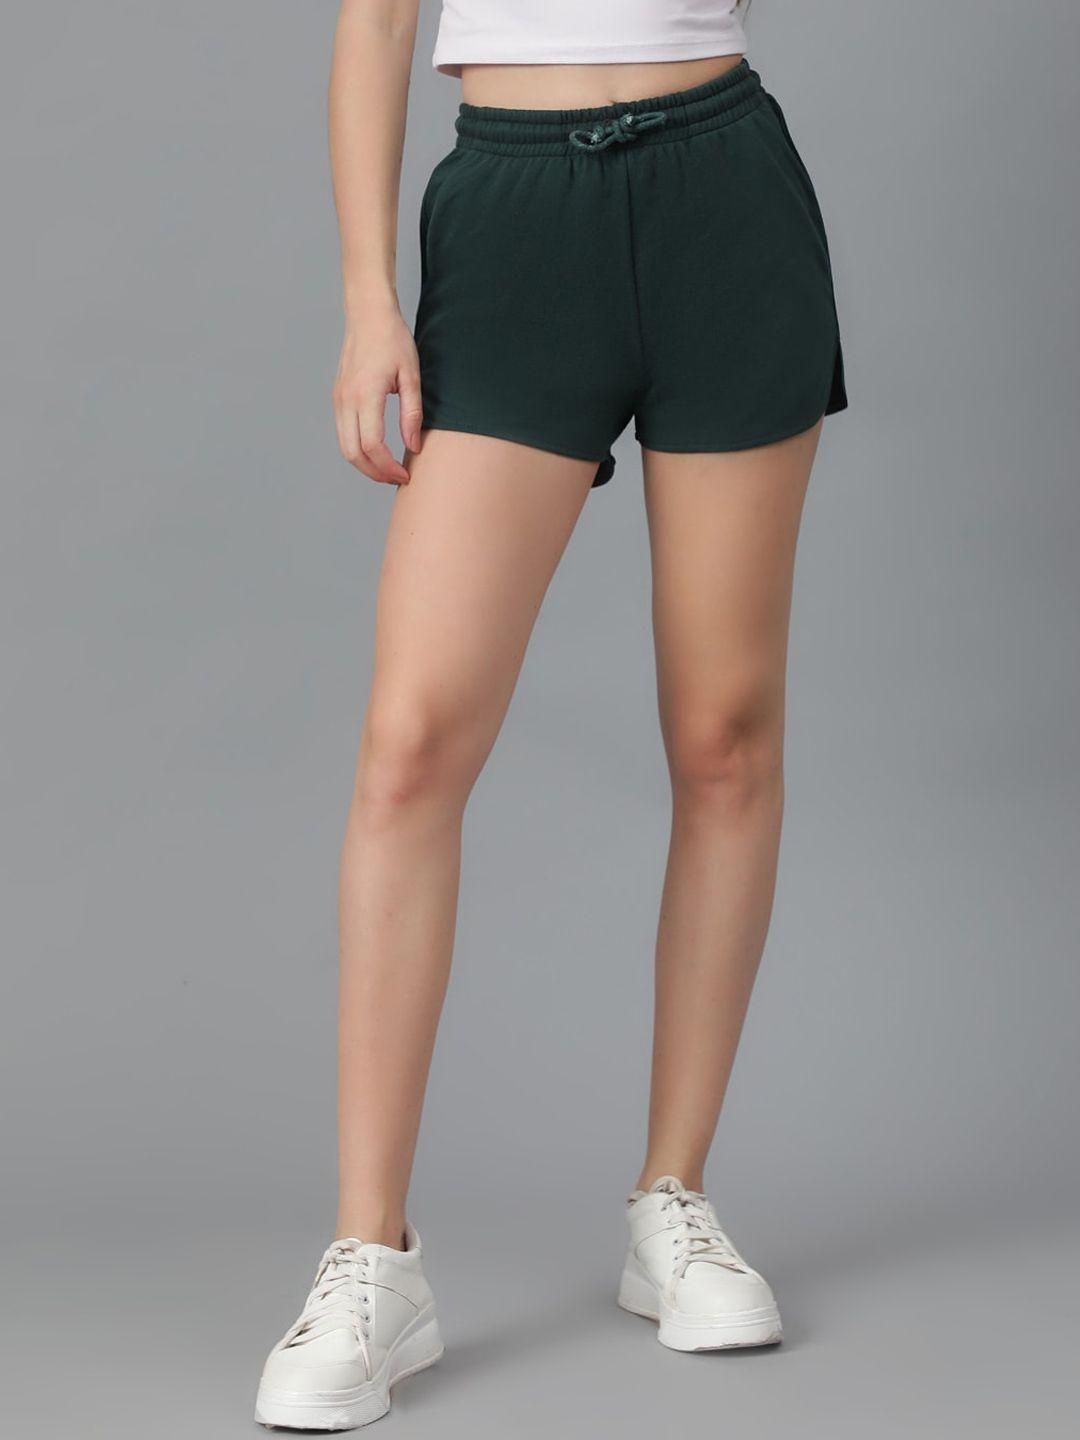 kotty-women-green-slim-fit-running-shorts